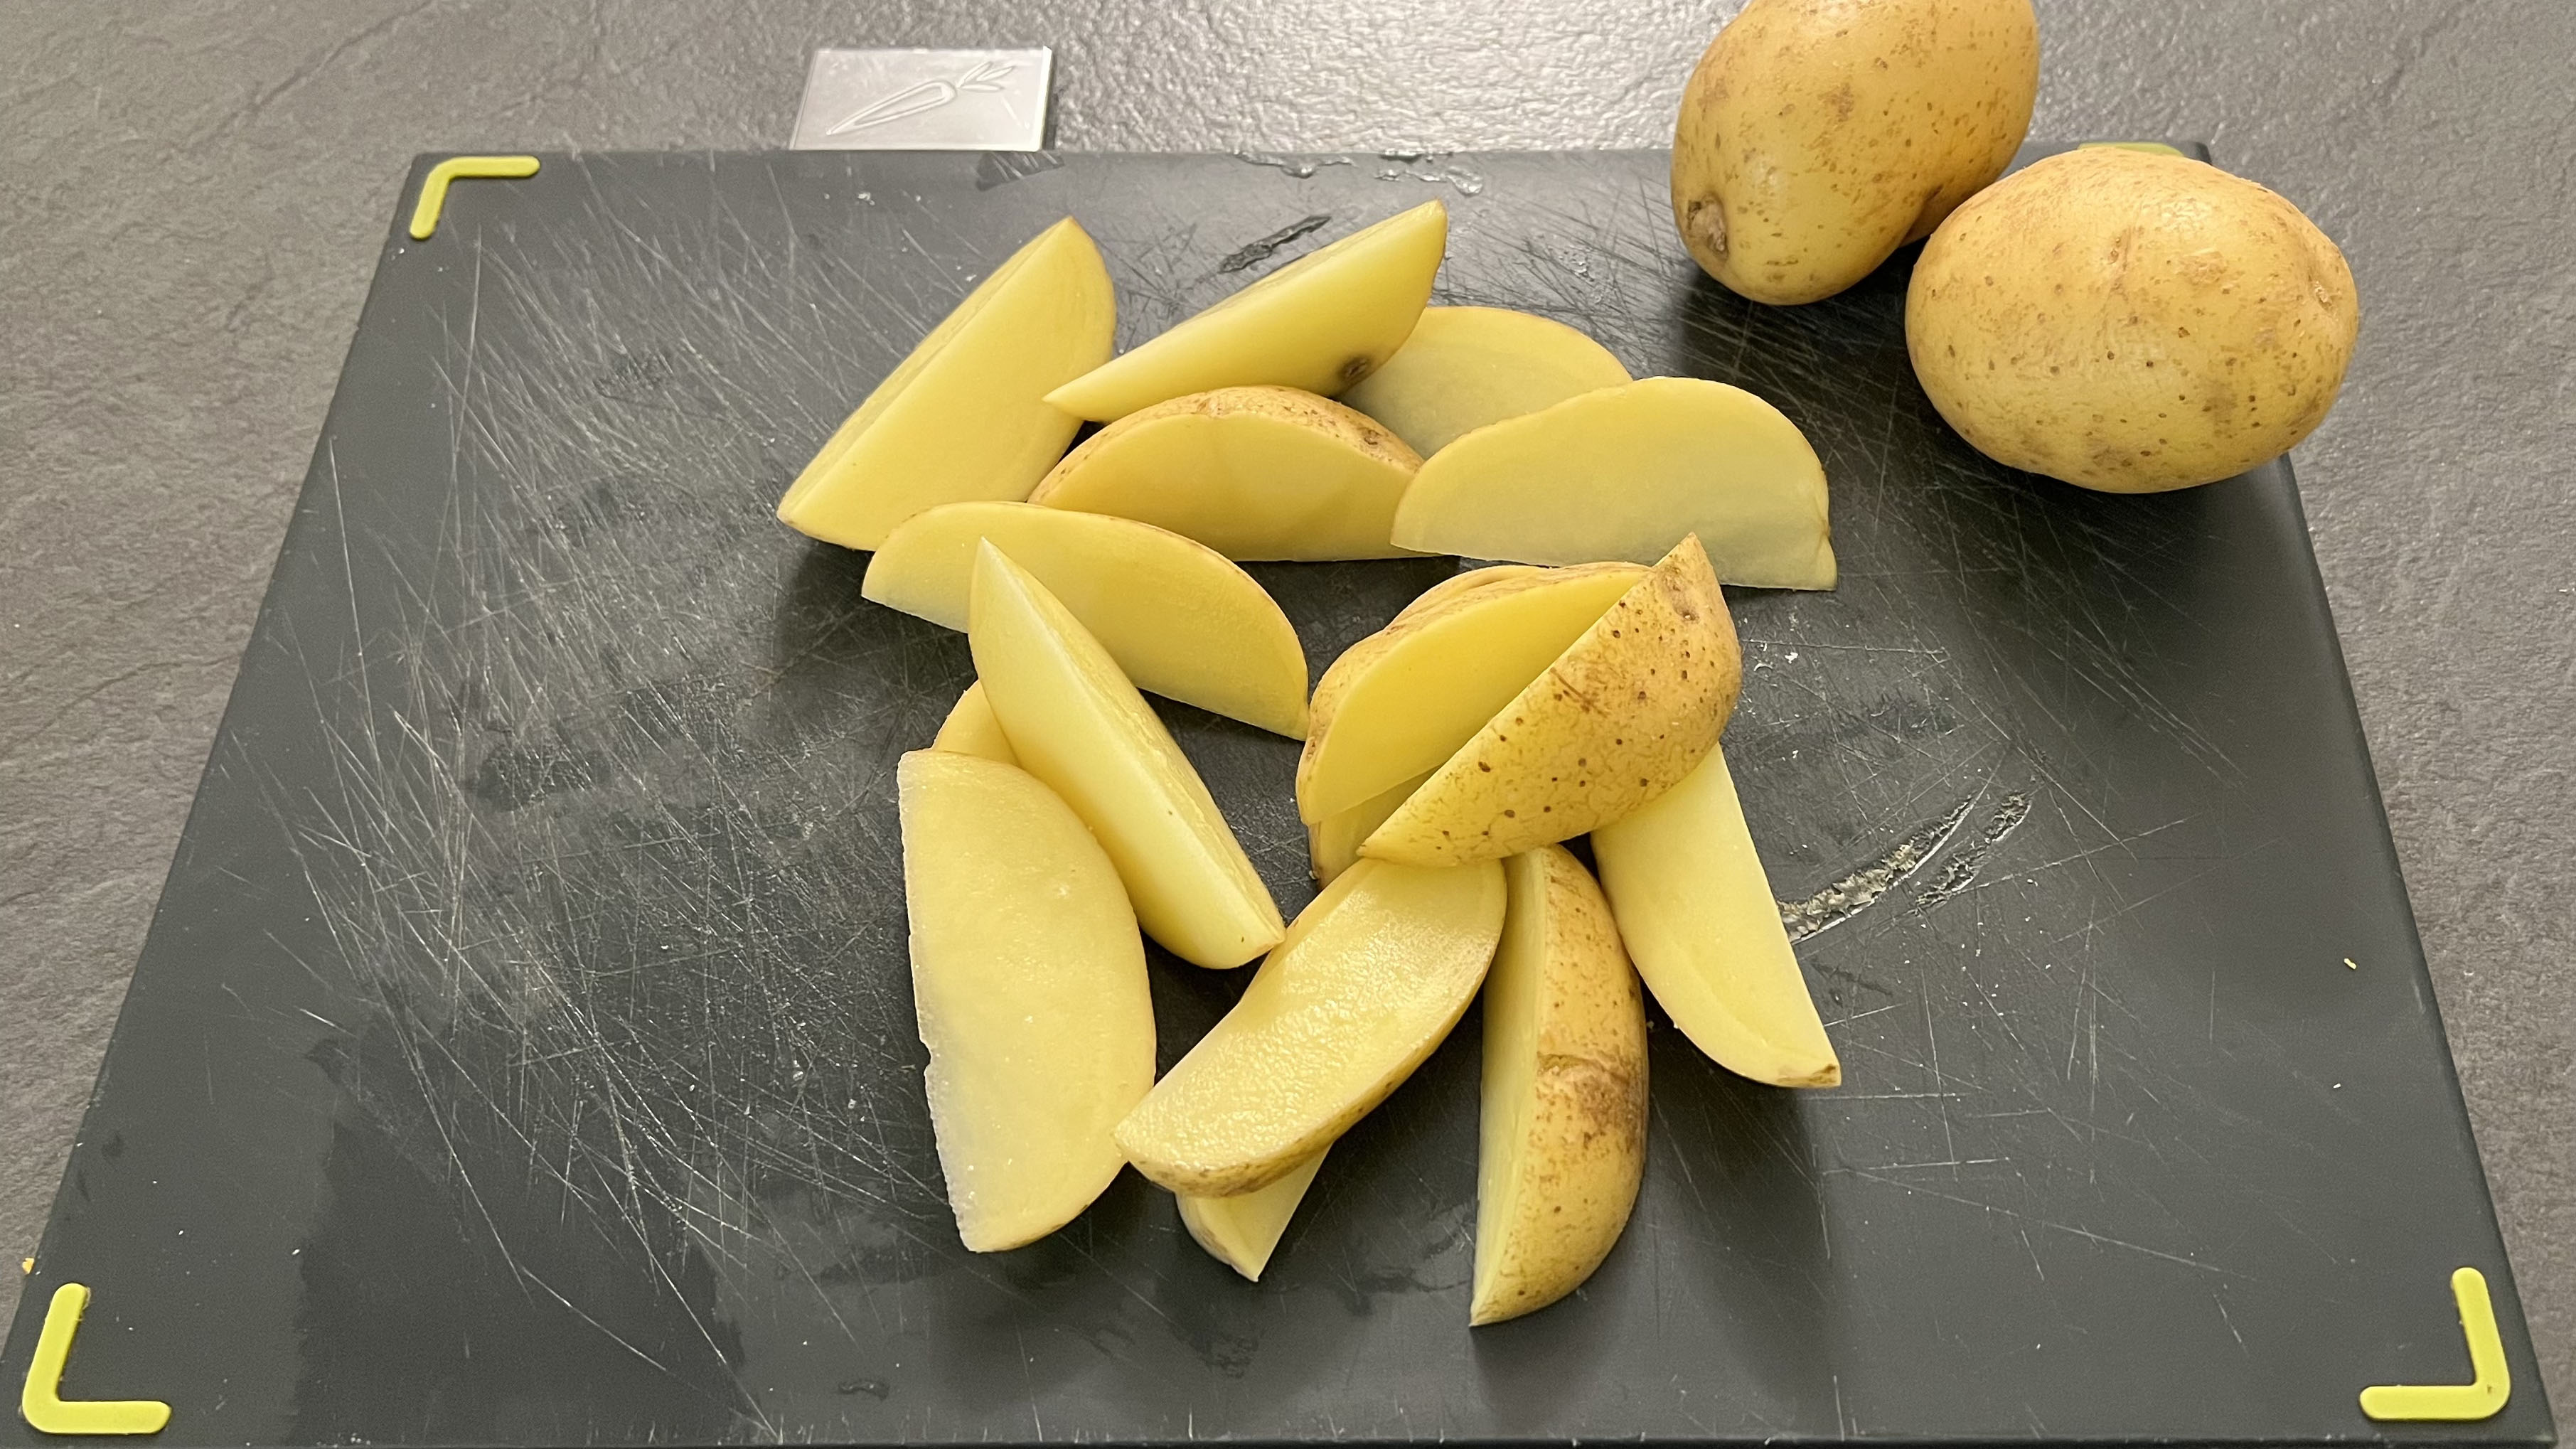 Chopped potato wedges on a cutting board